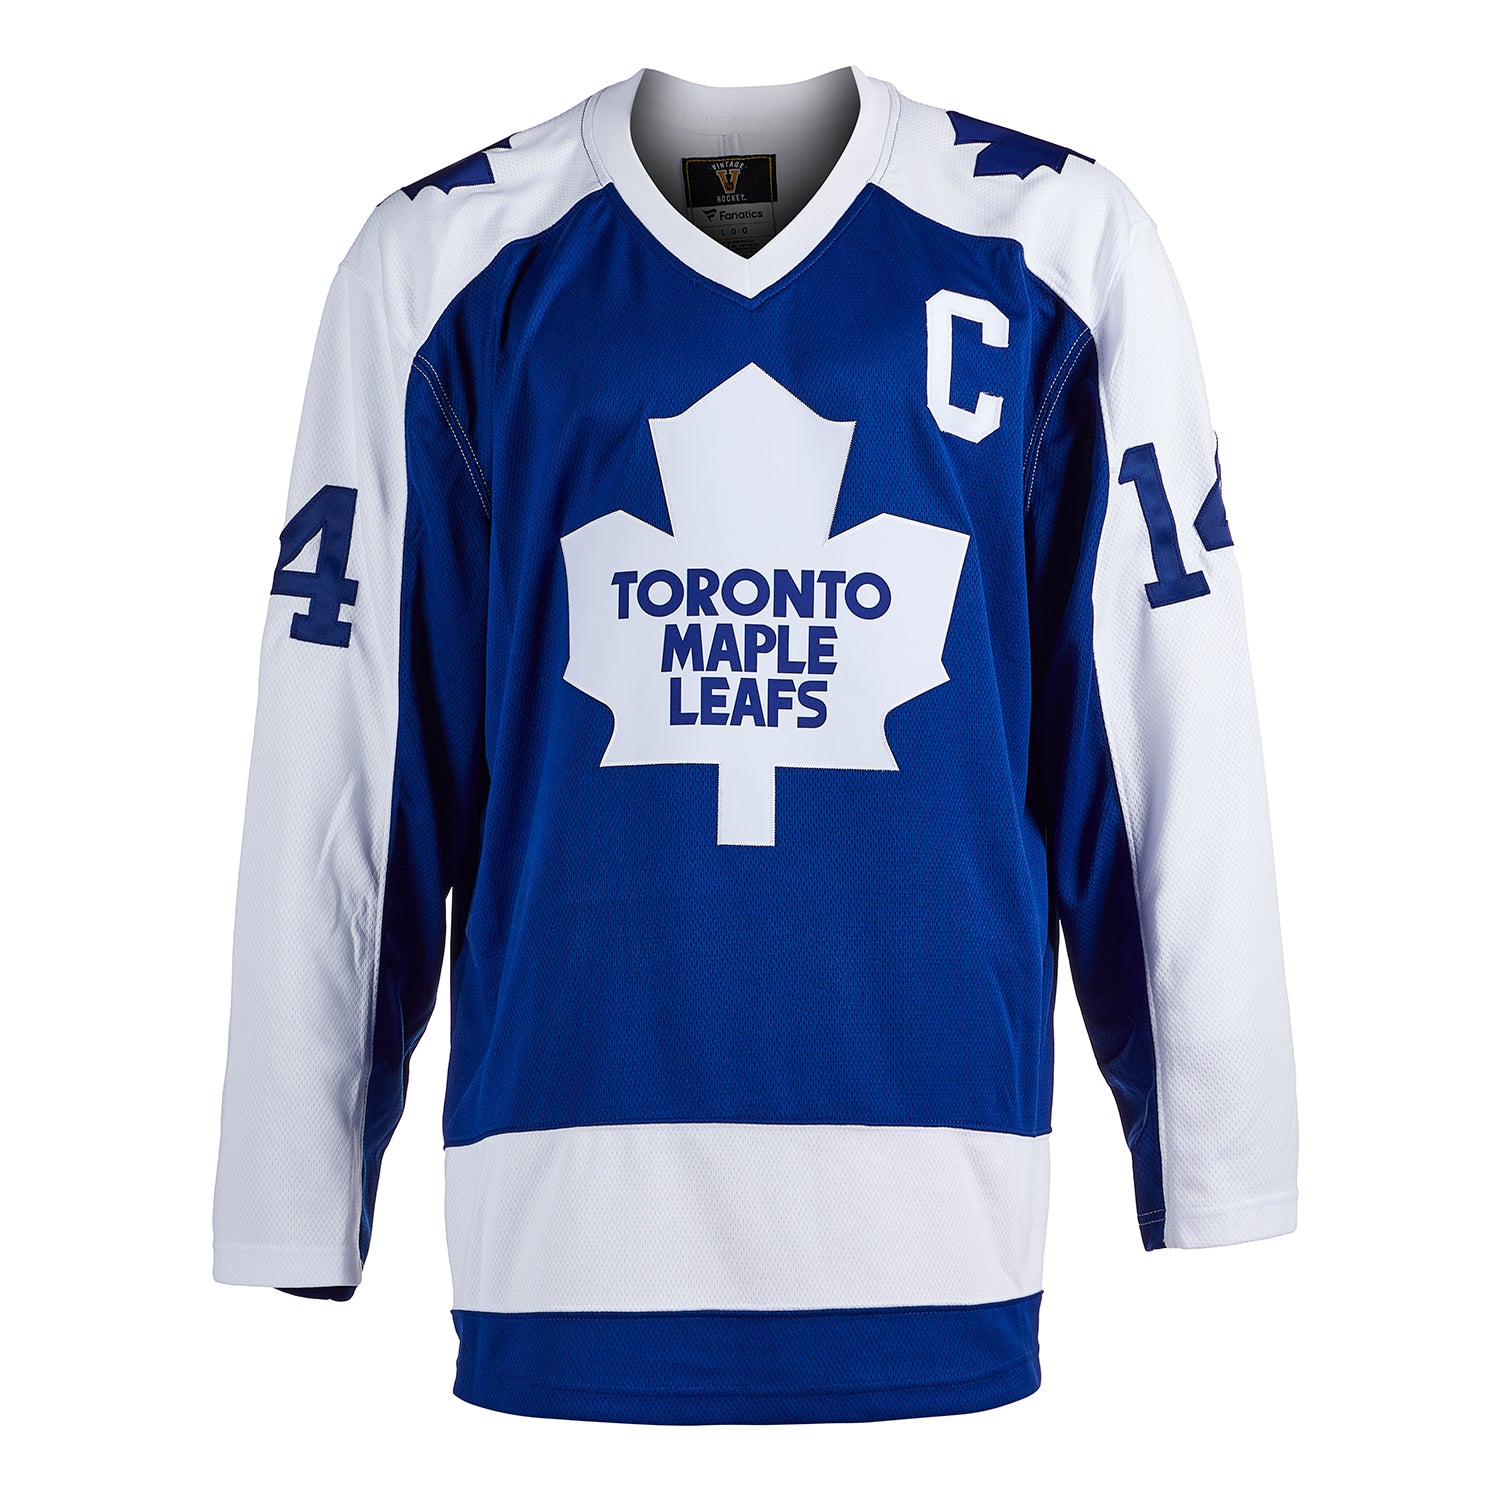 Youth NHL Toronto Maple Leafs St. Pats – Replica Jersey - Sports